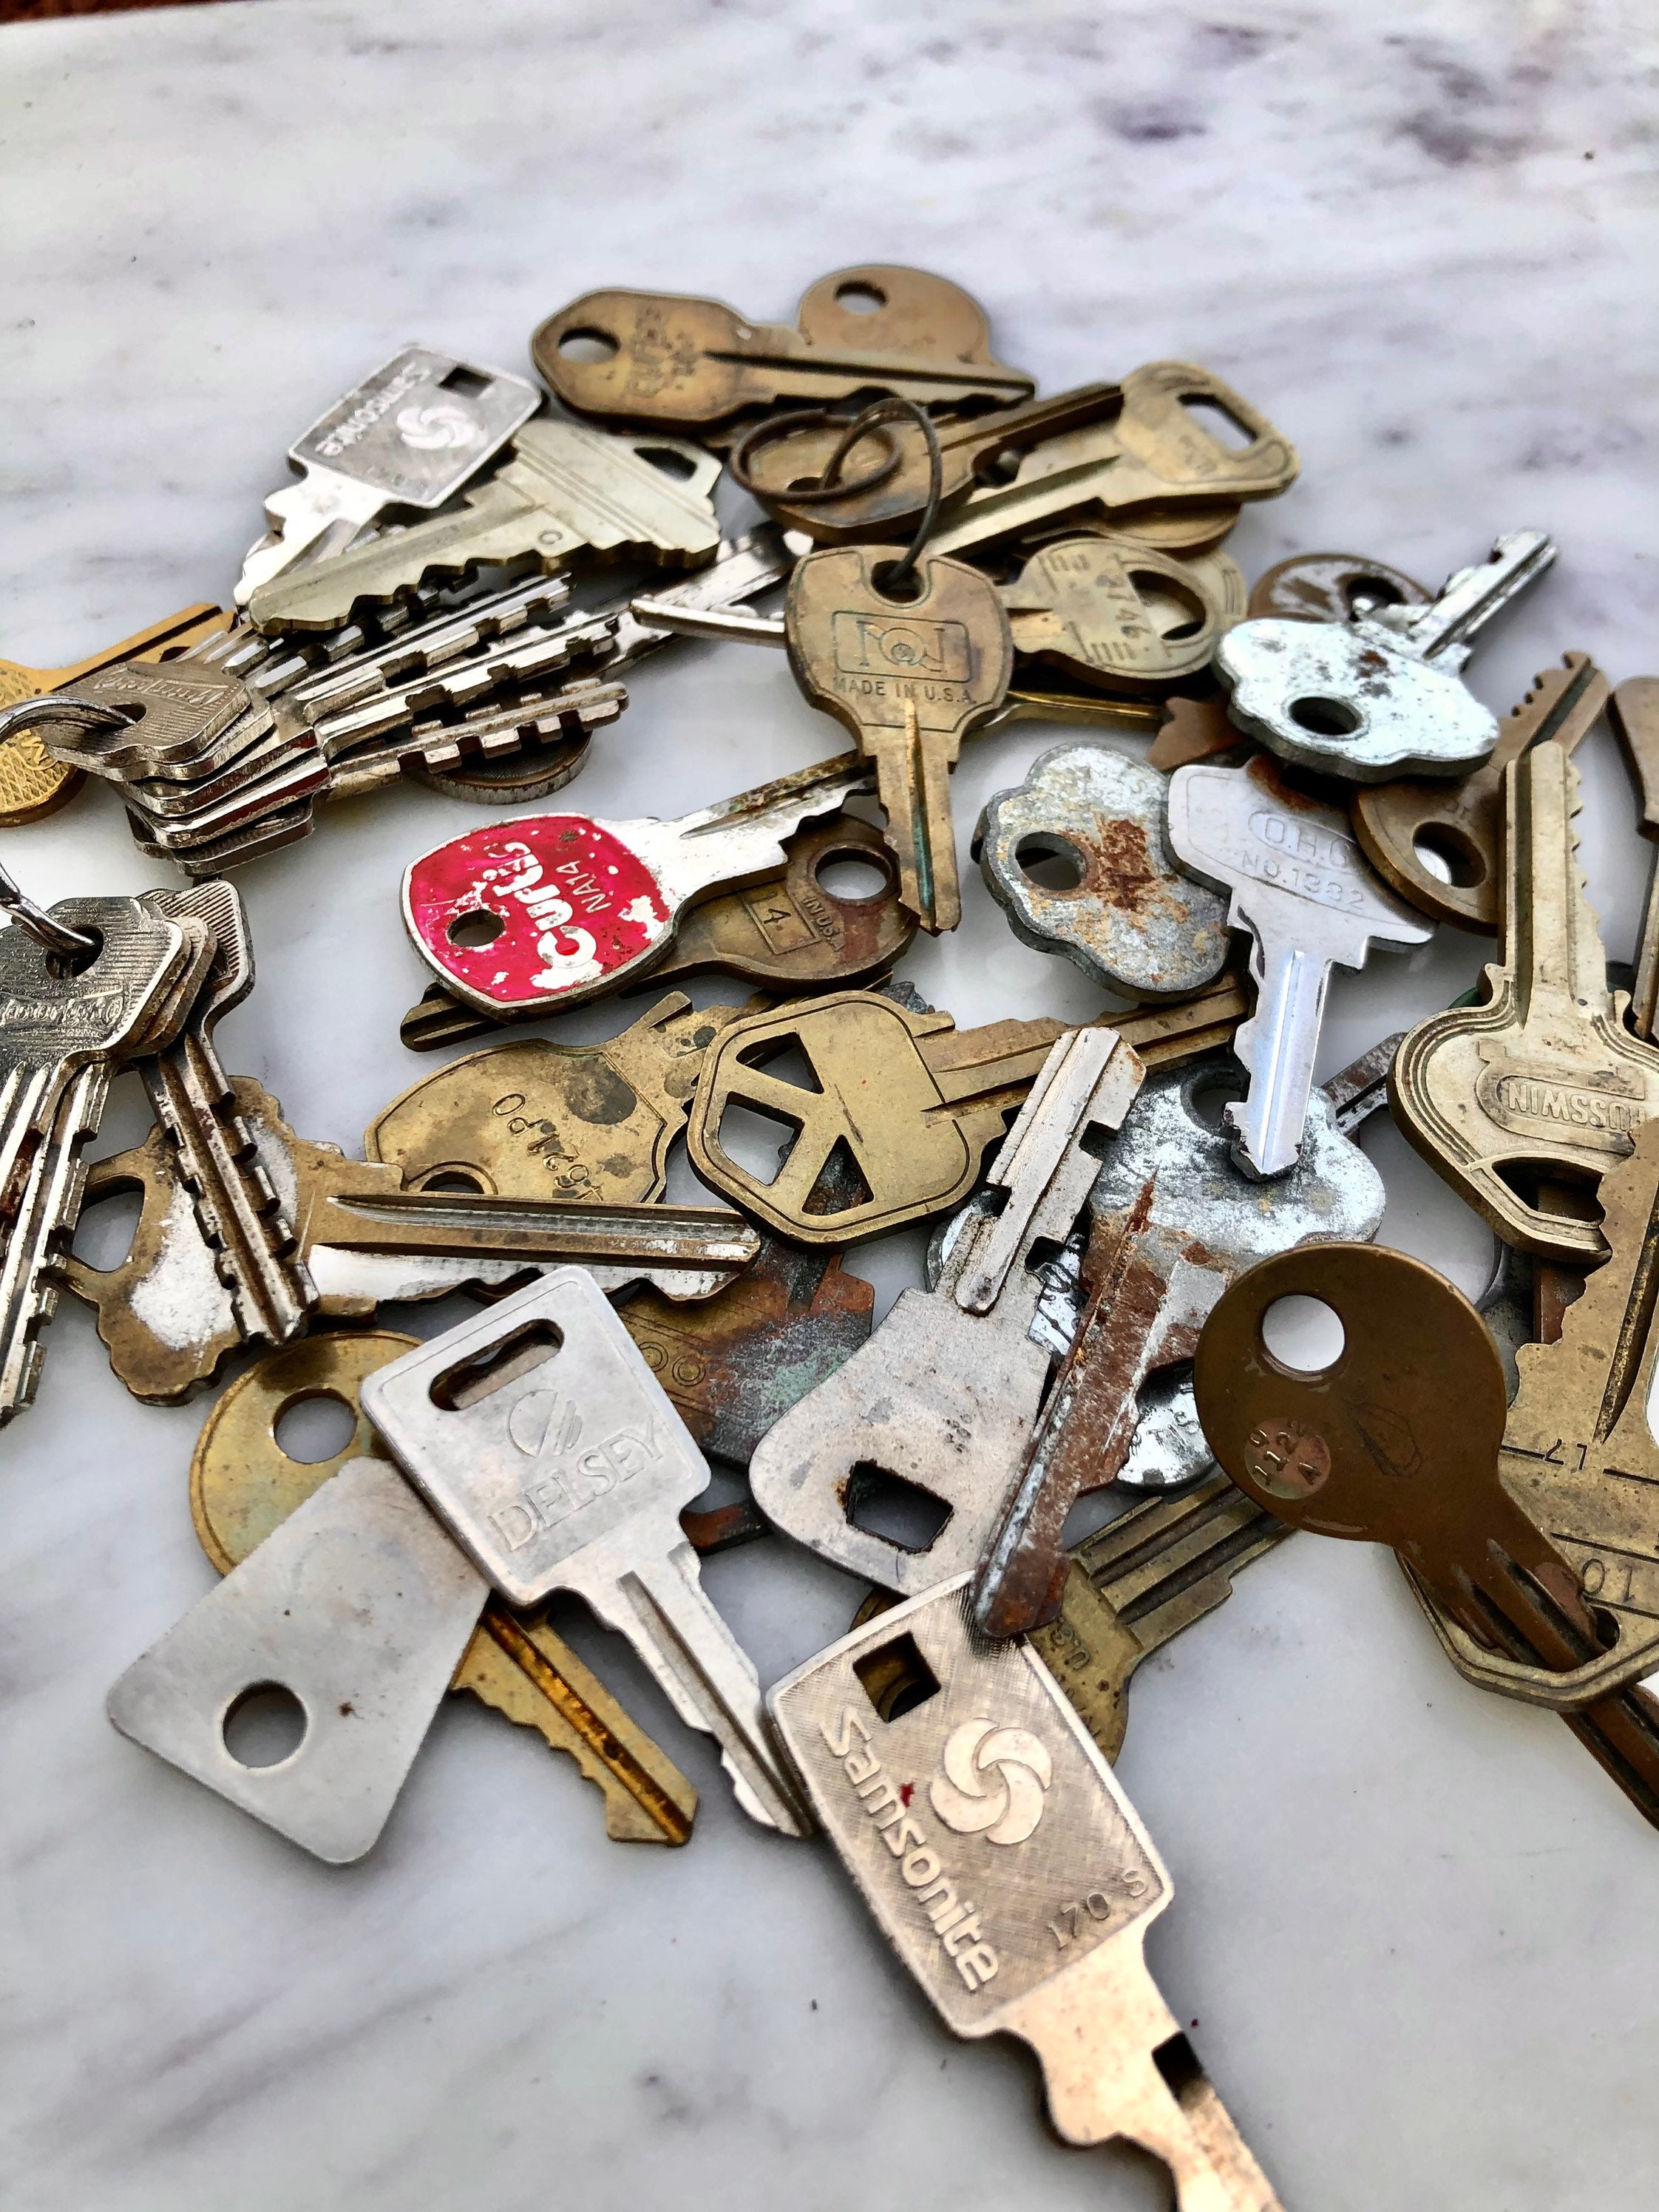 Vintage Bundle 50 / AUTO KEYS / Old Car Keys Rusty Keys Automobile